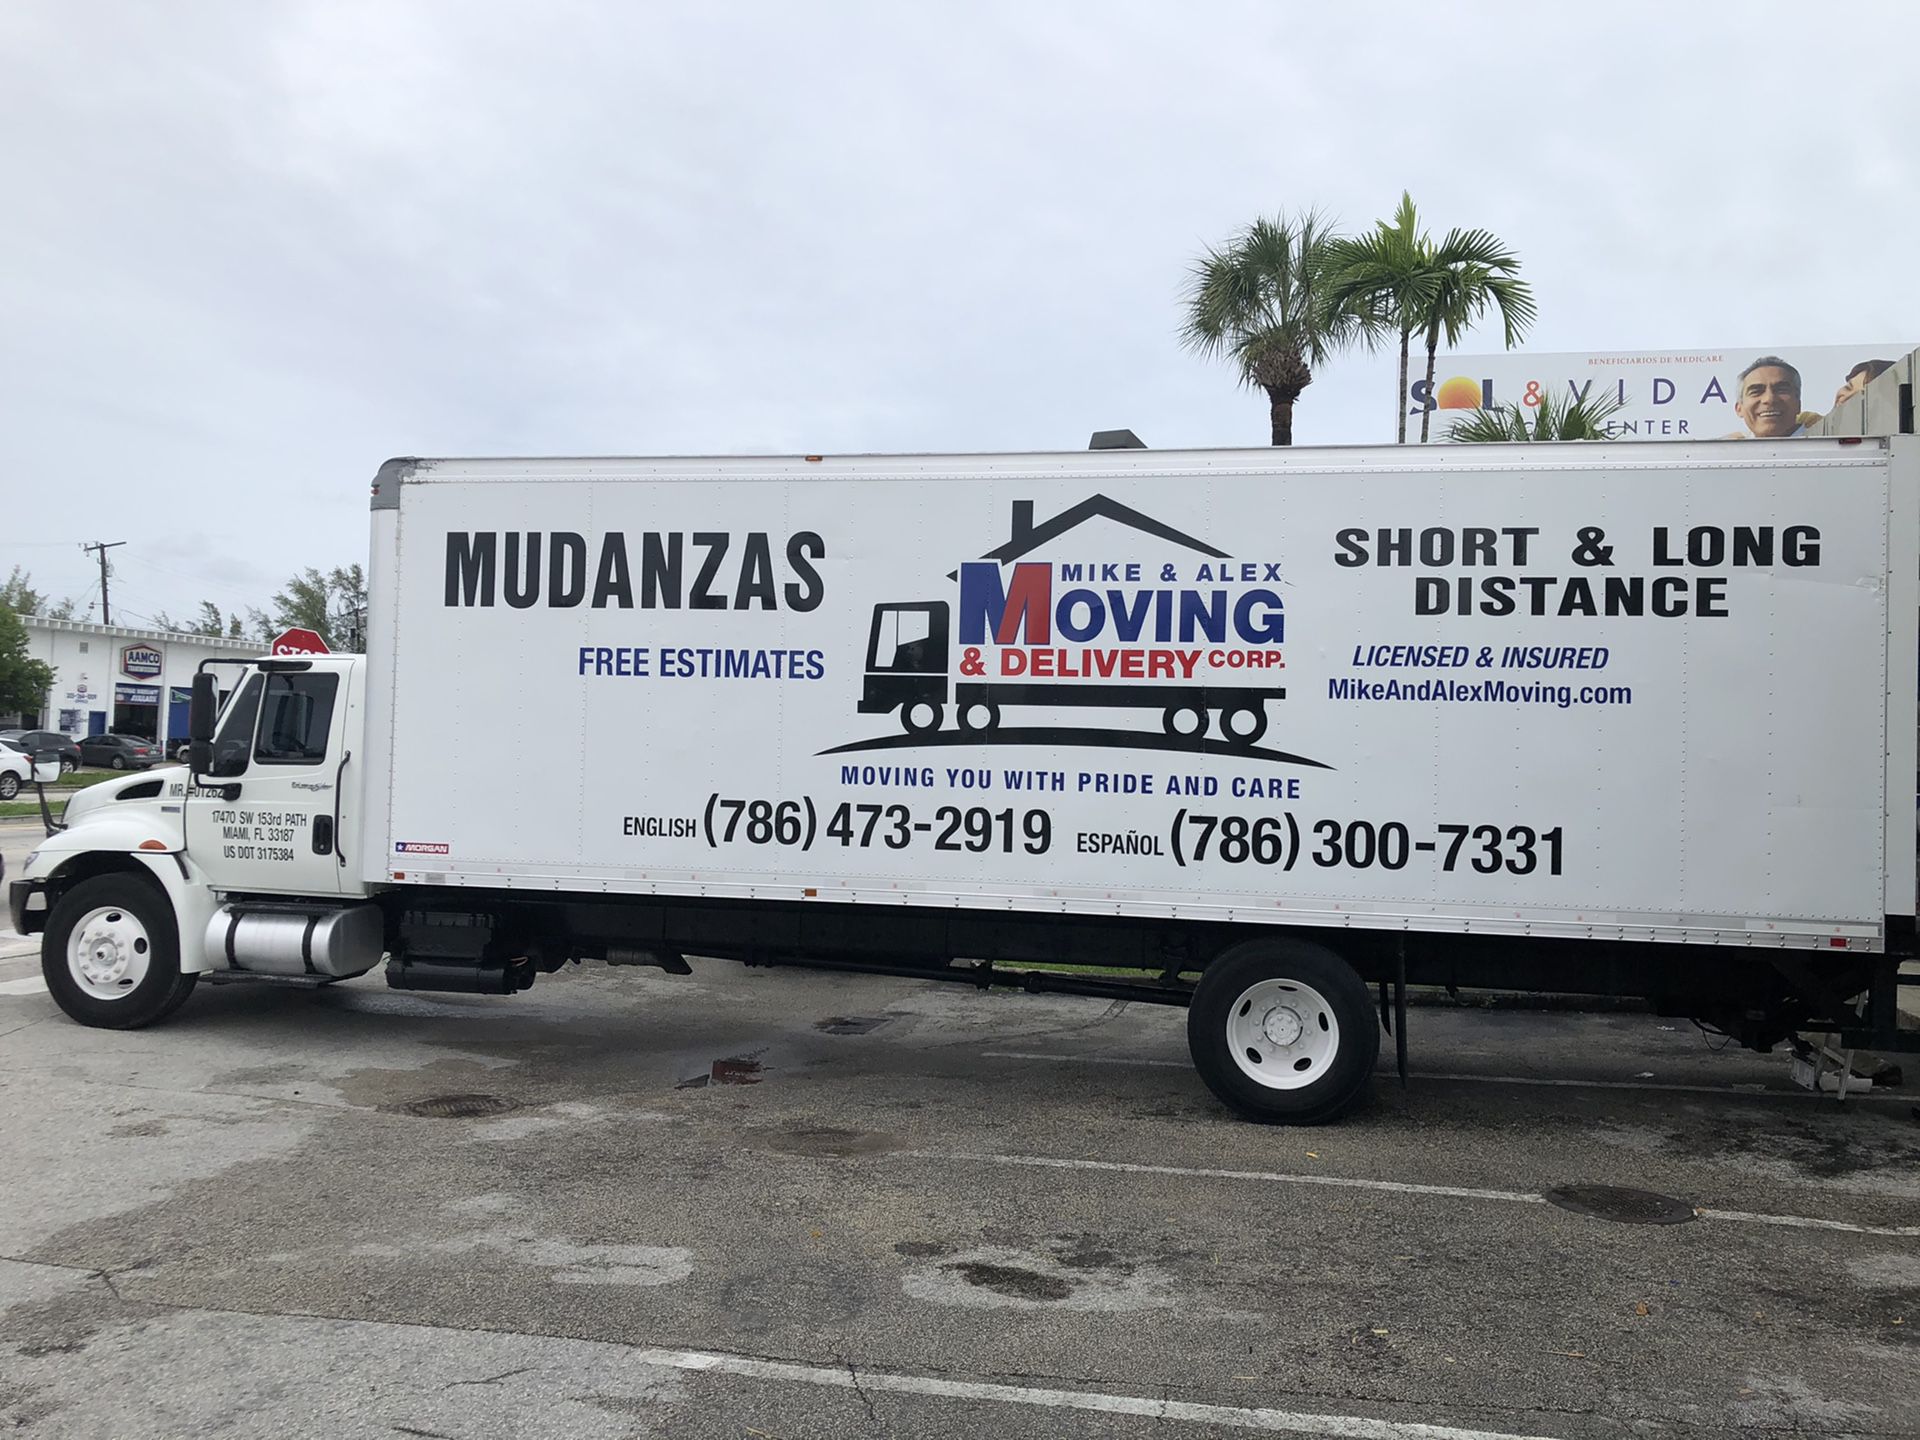 Mudanzas(Moving company)